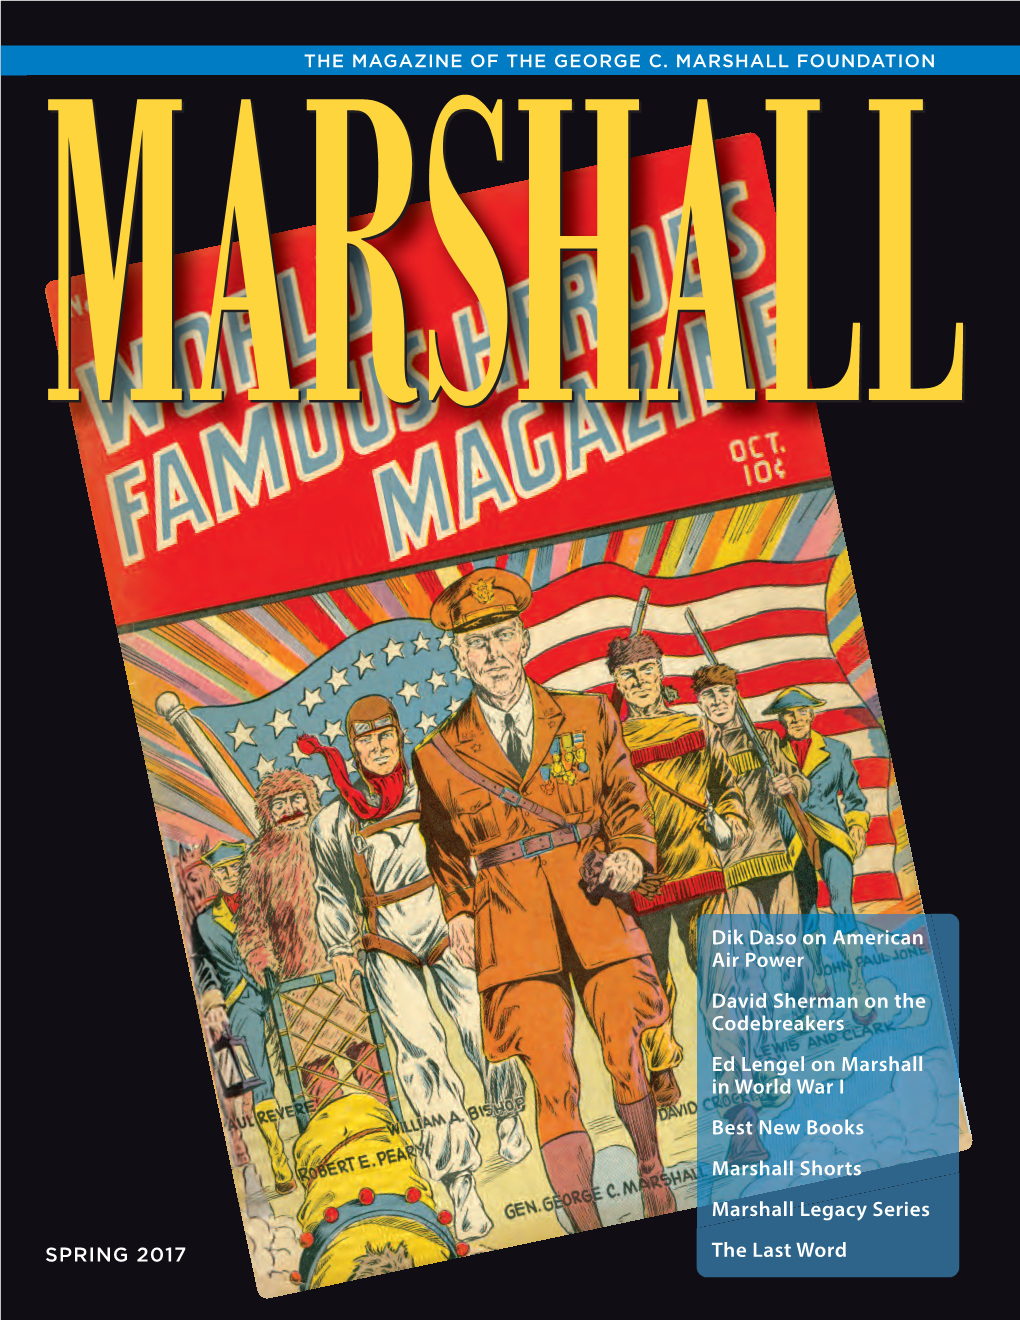 Dik Daso on American Air Power David Sherman on the Codebreakers Ed Lengel on Marshall in World War I Best New Books Marshall Shorts Marshall Legacy Series